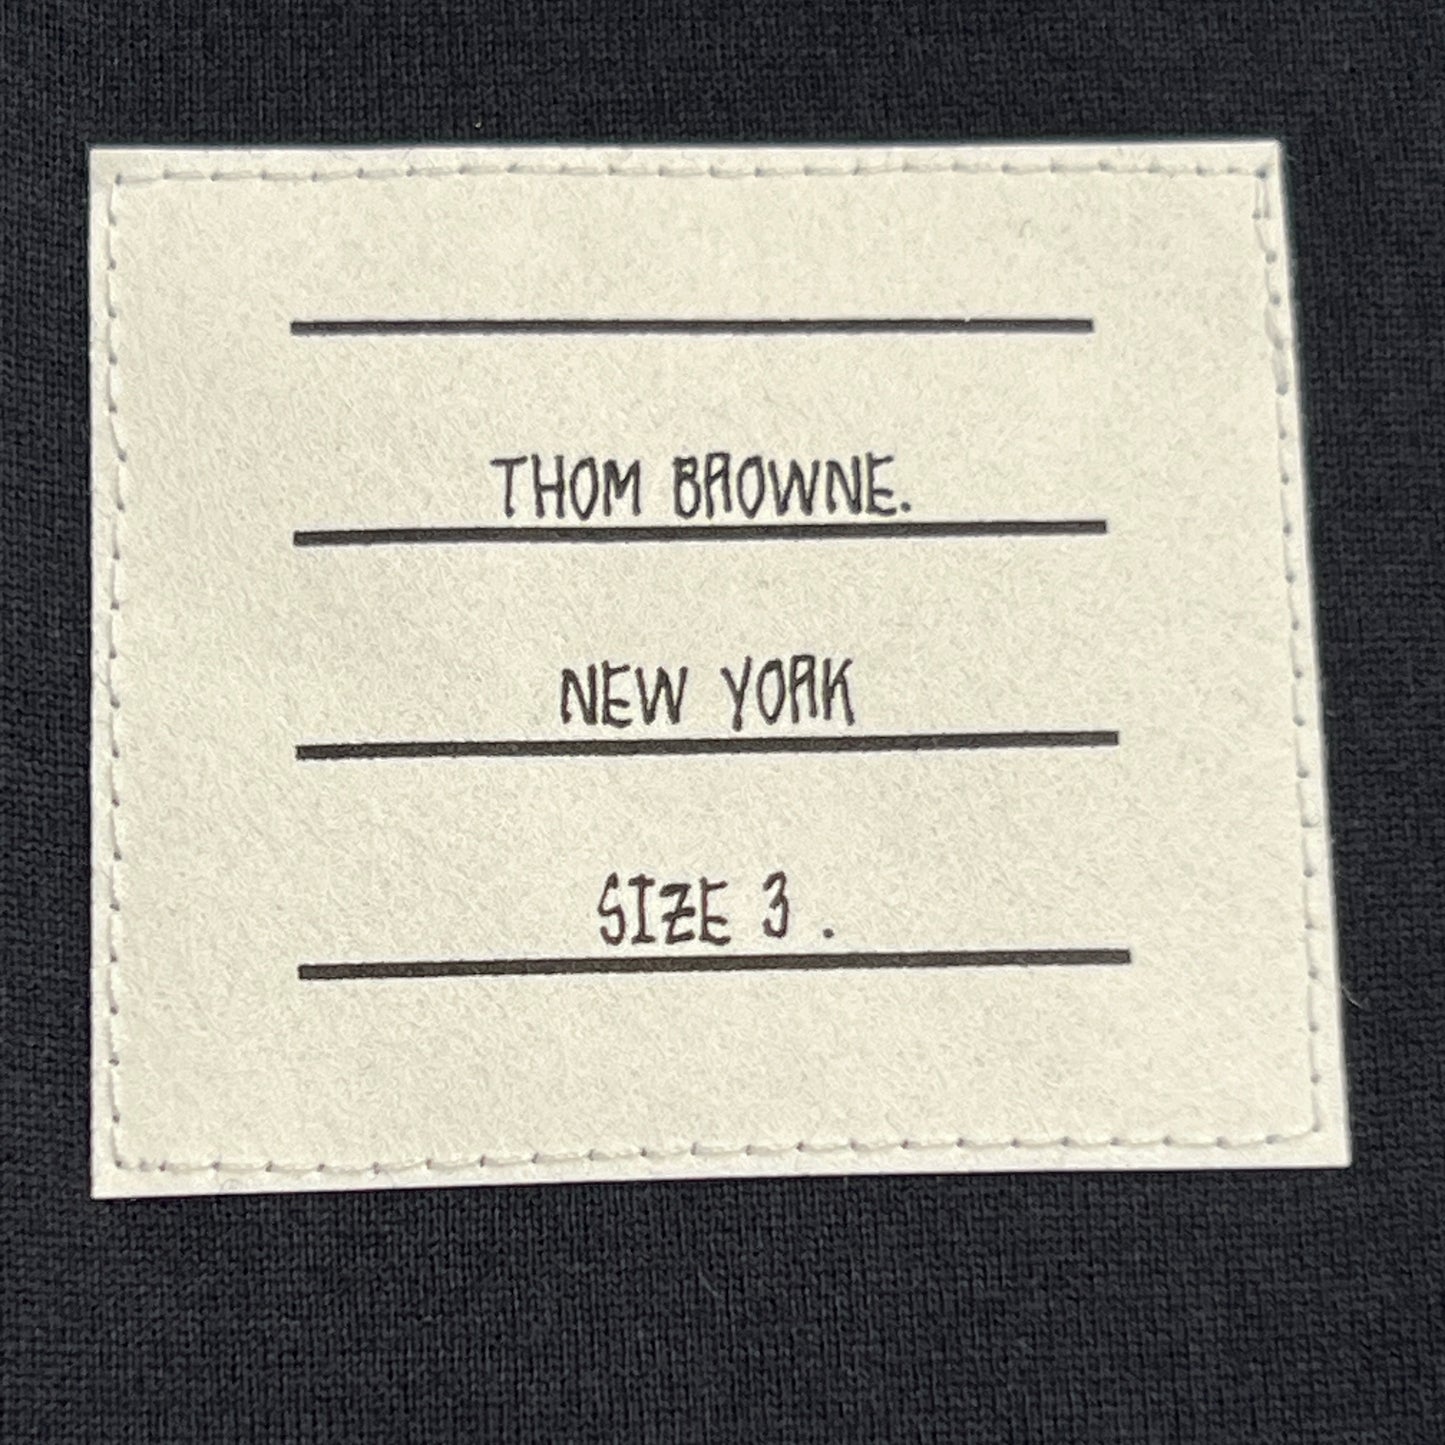 THOM BROWNE Short Sleeve RWB Pocket Tee in Medium Weight Jersey Cotton Navy Size 3(New)